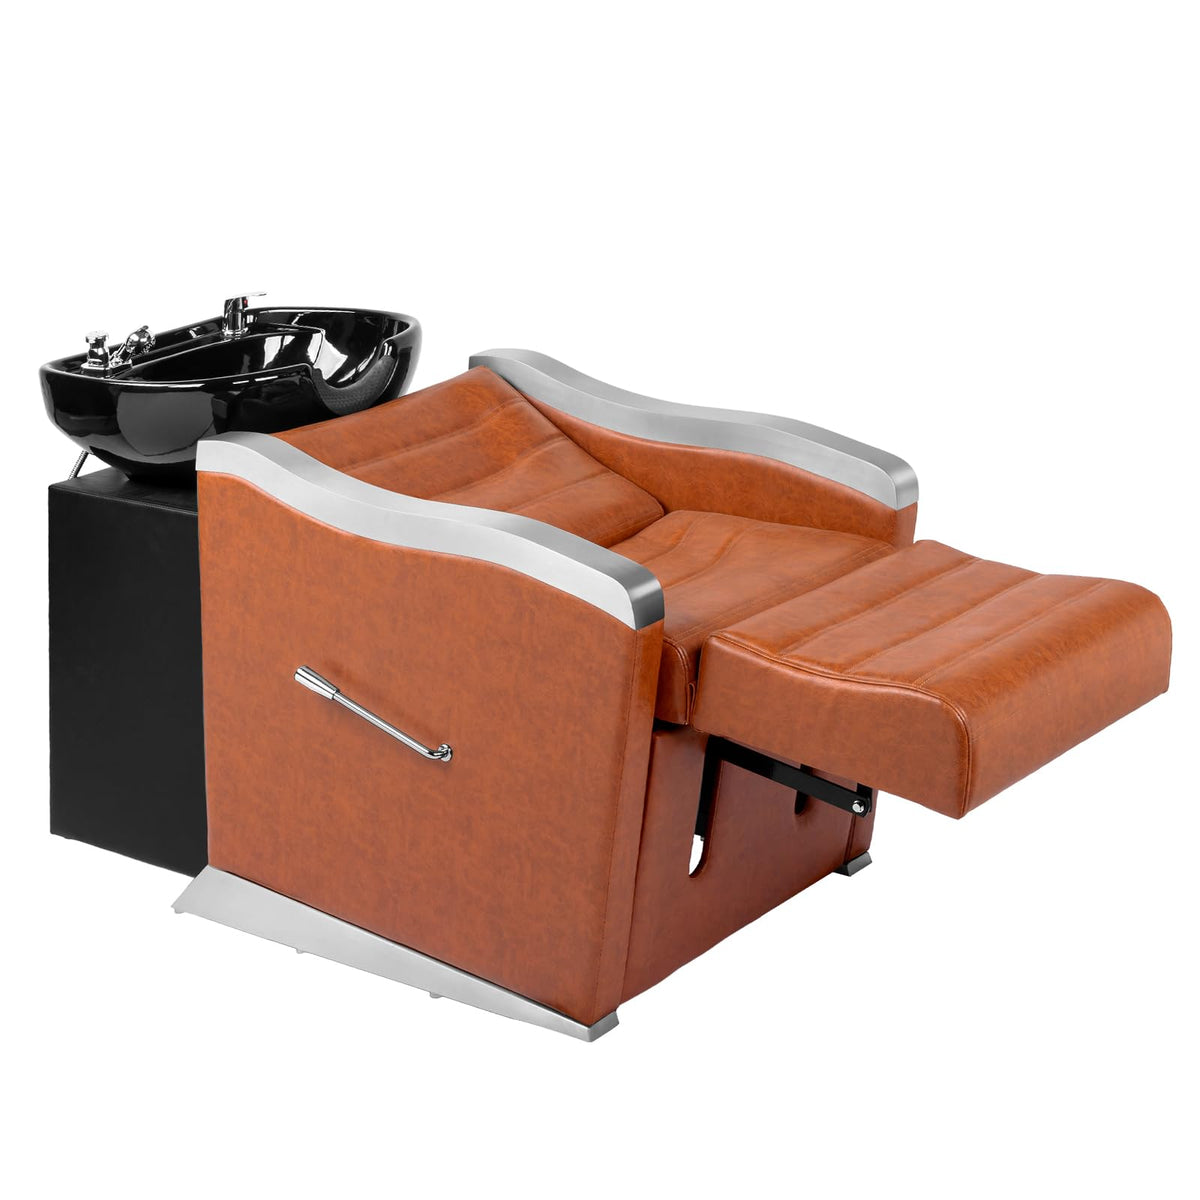 OmySalon BU1501 Salon Shampoo Bowl and Chair Backwash Unit with Ceramic Wash Bowl & Adjustable Footrest